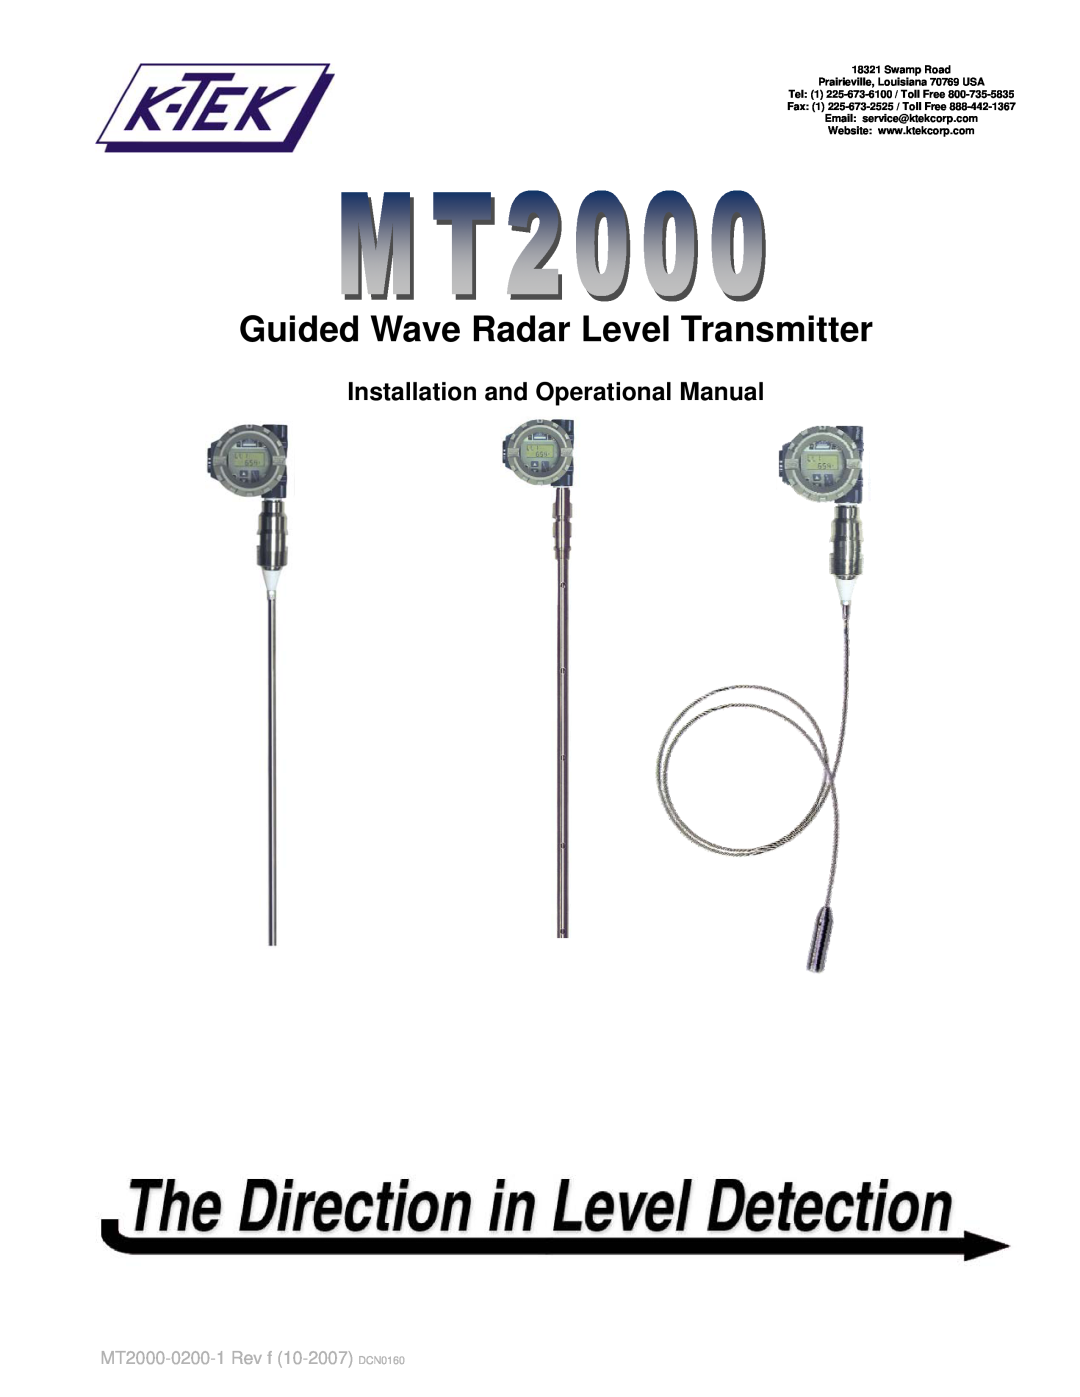 K-Tec MT2000 manual Installation and Operational Manual, Guided Wave Radar Level Transmitter, Swamp Road 